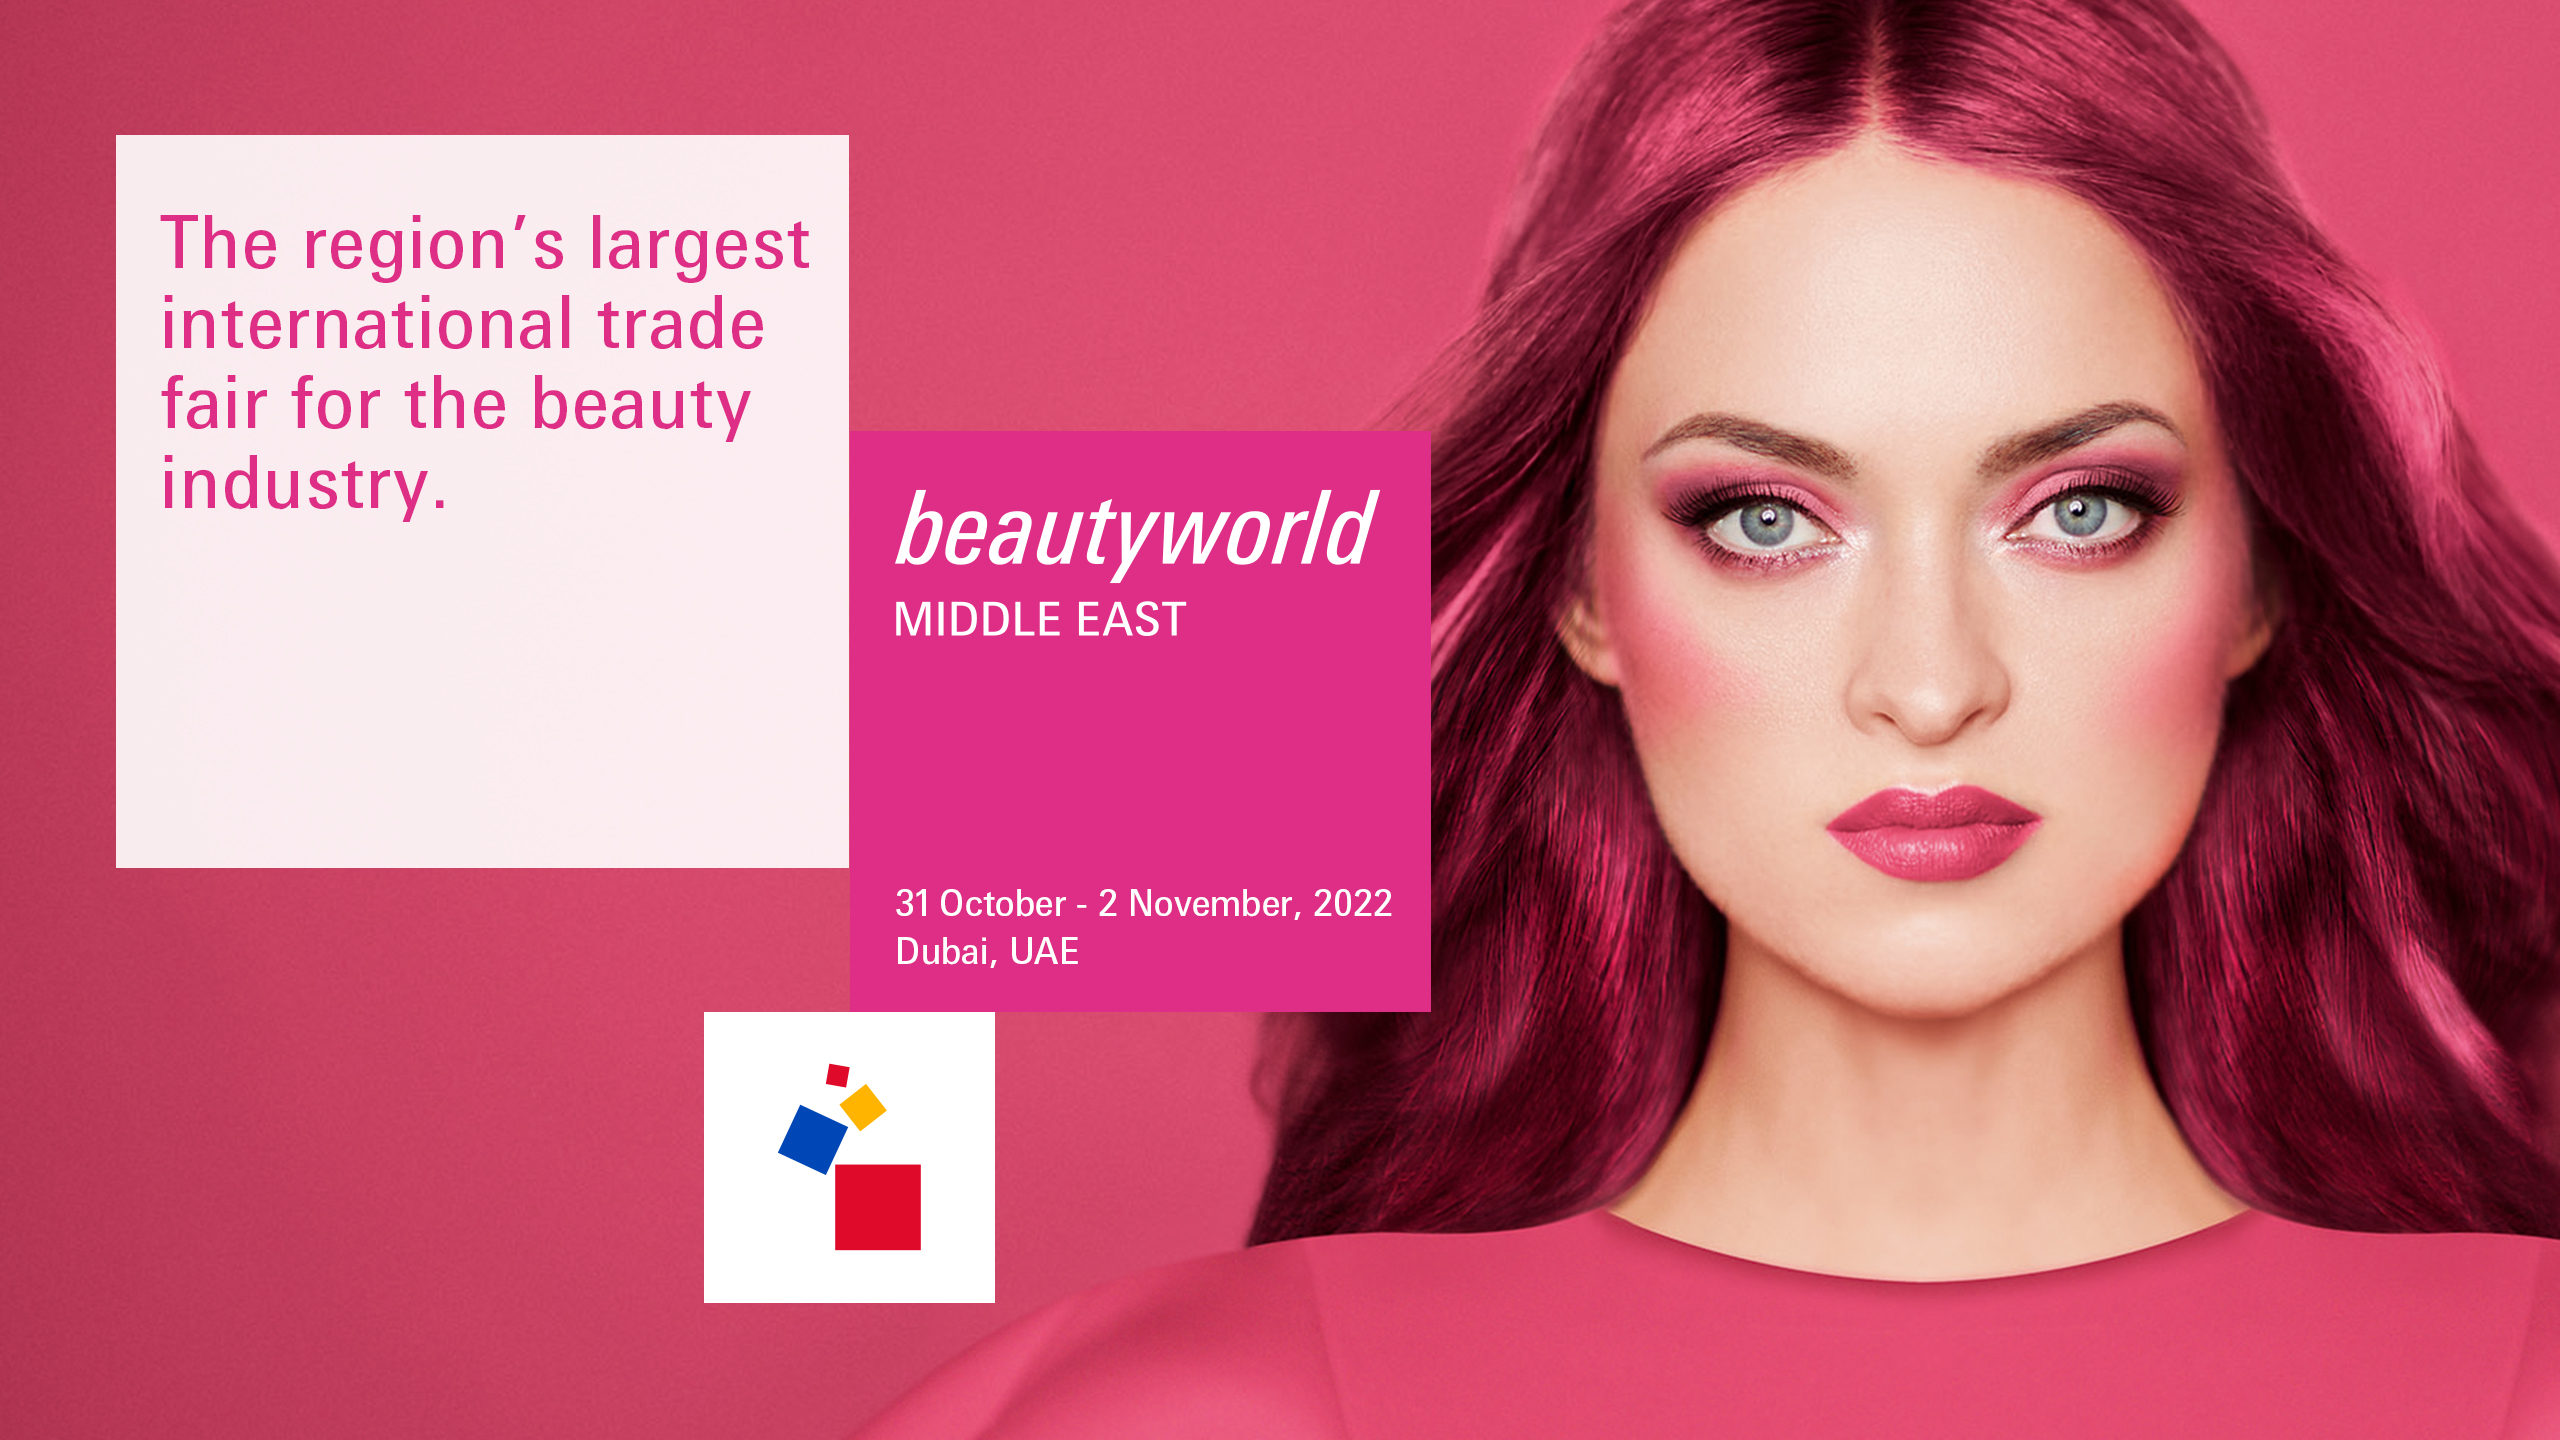 Beautyworld Middle East Keyvisual 2022